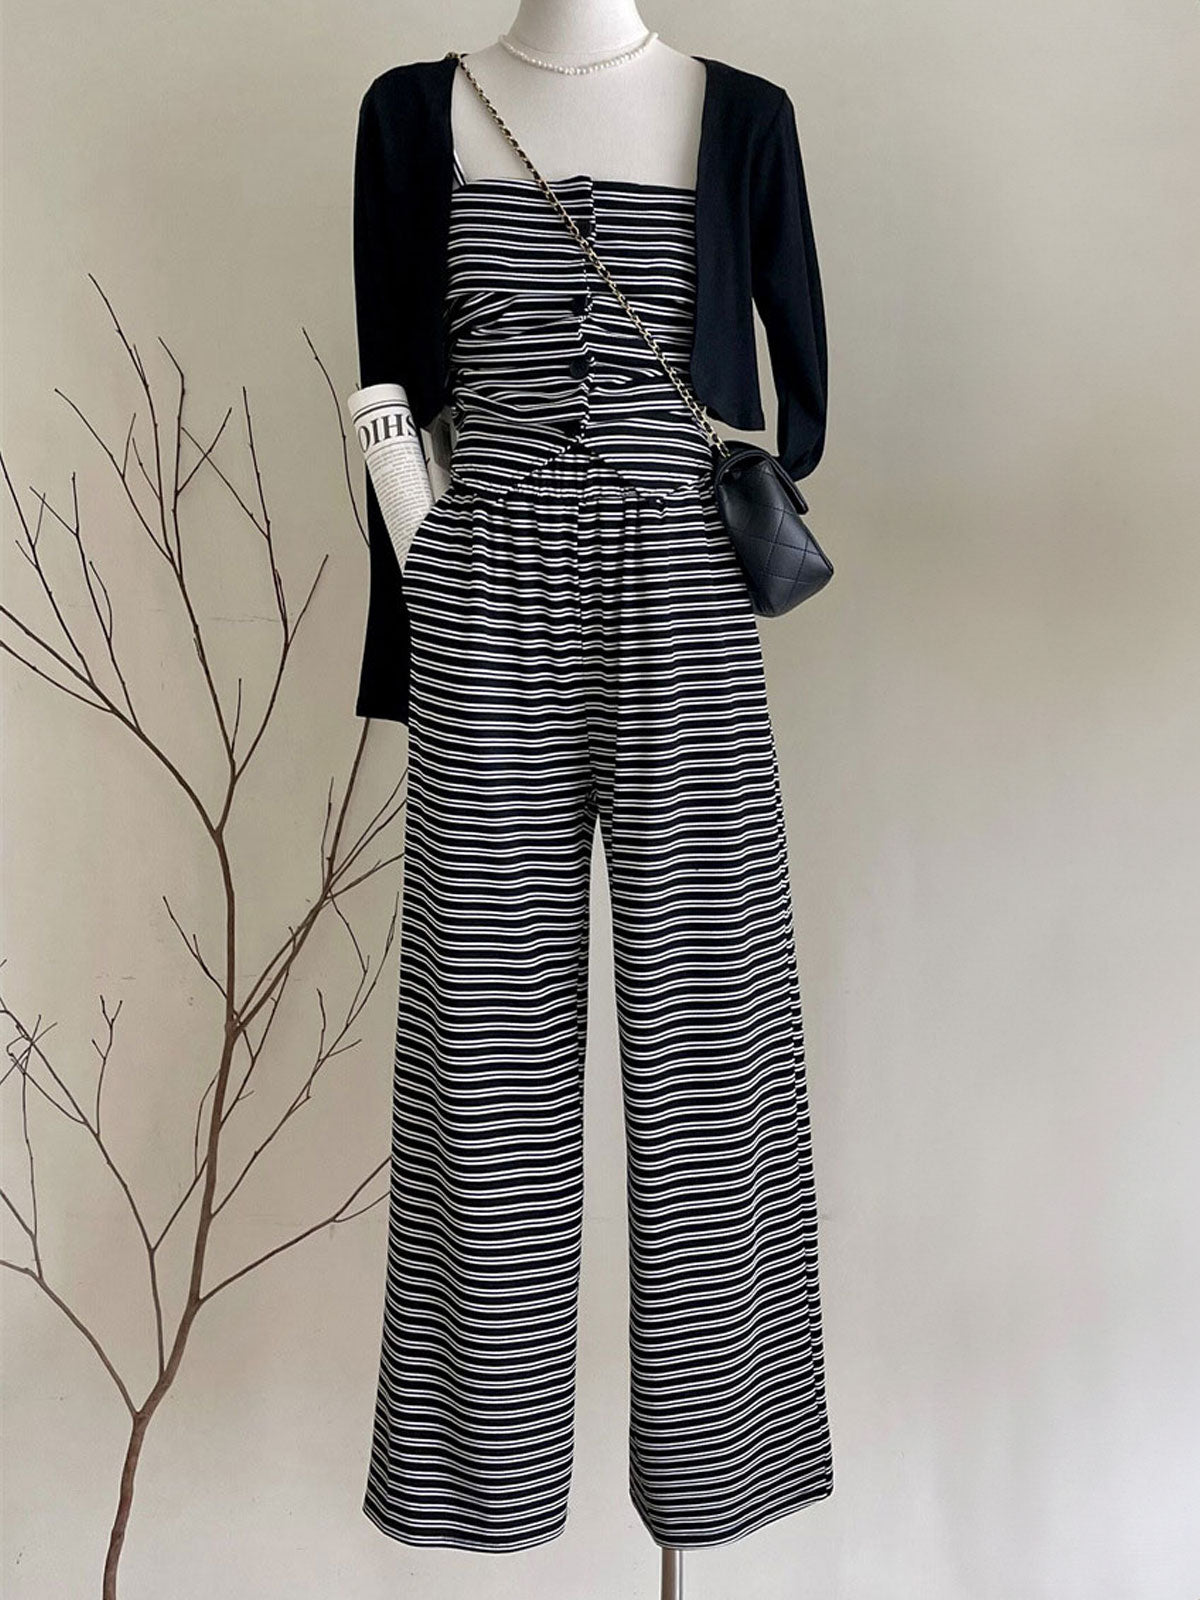 Black Striped Pant Suit 3PC Pajama Set